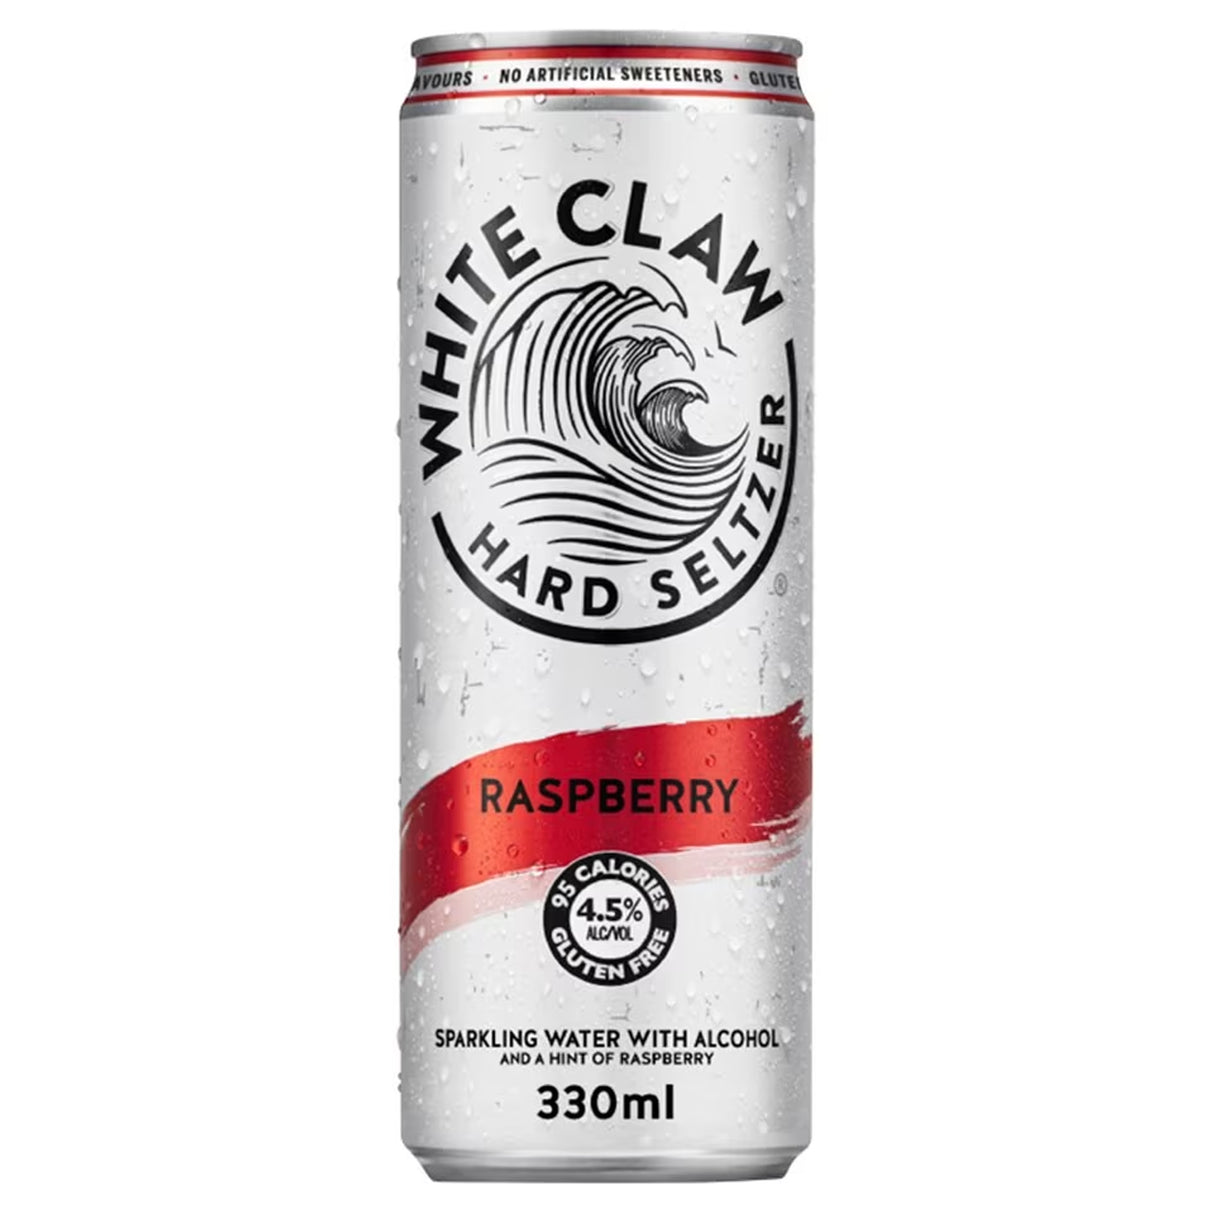 WHITE CLAW HARD SELTZER RASPBERRY CANS (330ml) x 12